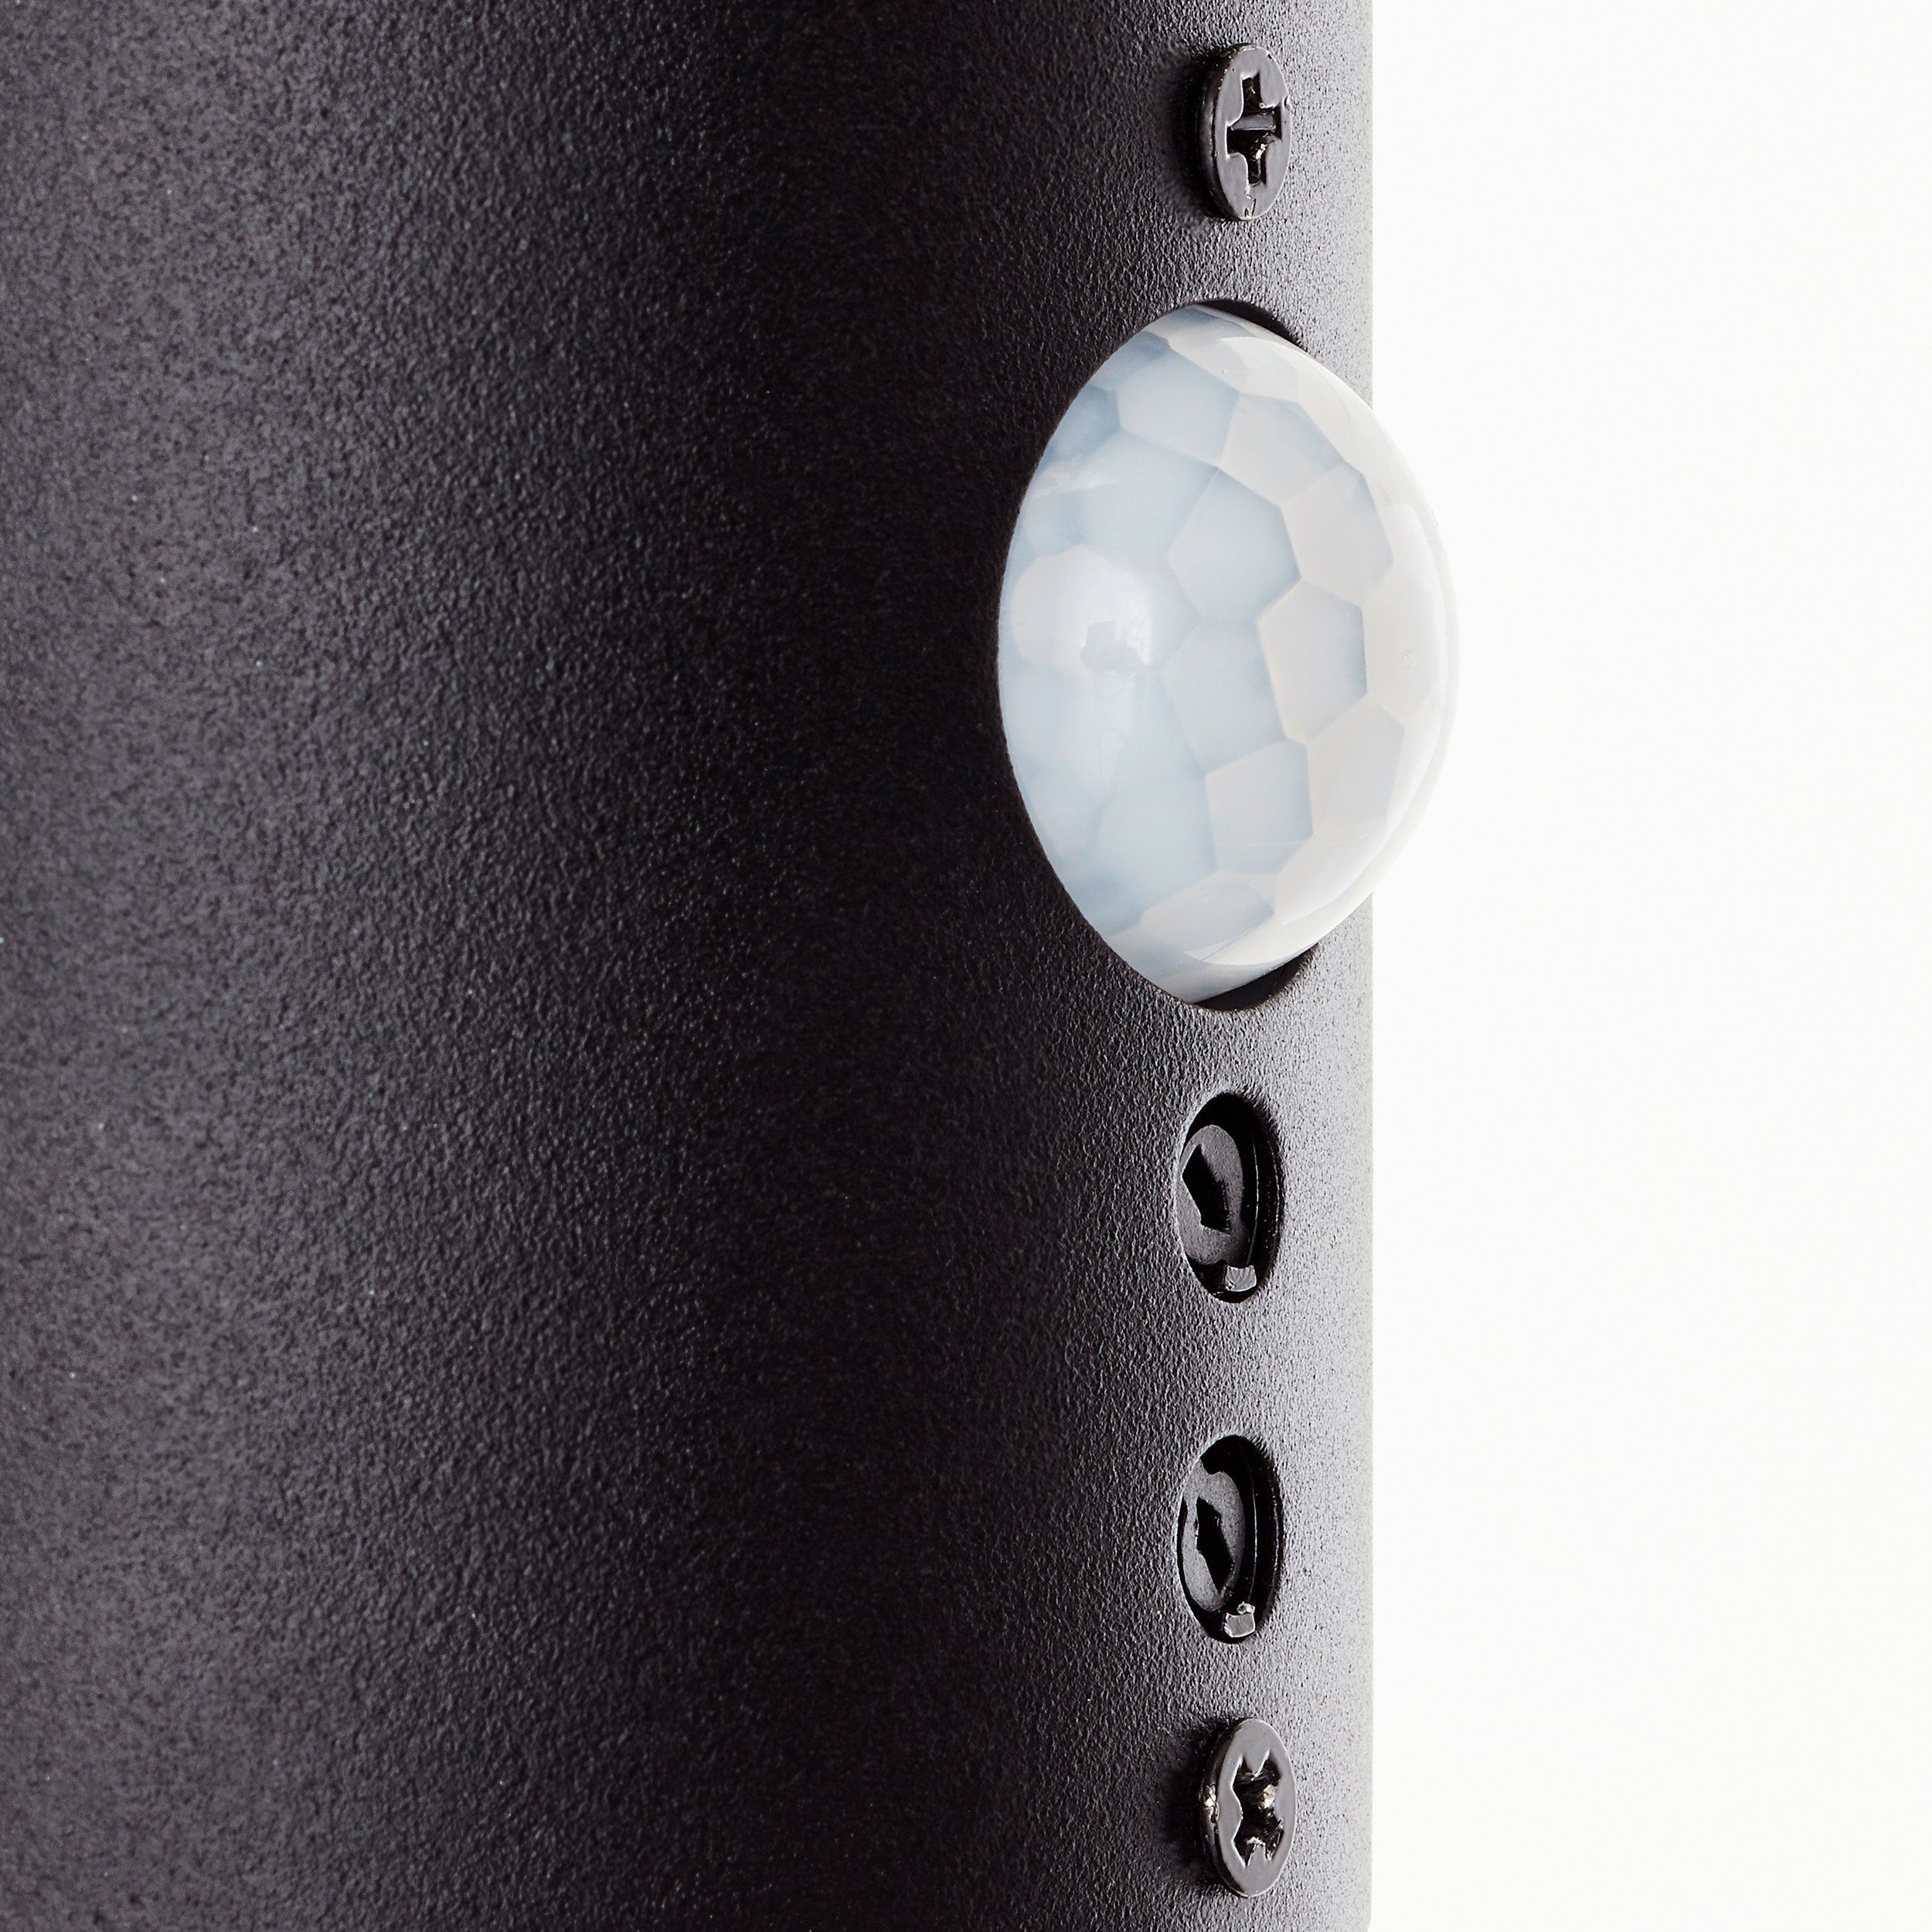 Ilton, Edelstahl/Kunststoff, LED Brilliant sand Ilton LED LED Außenwandleuchte schwarz, Außen-Wandleuchte 1x